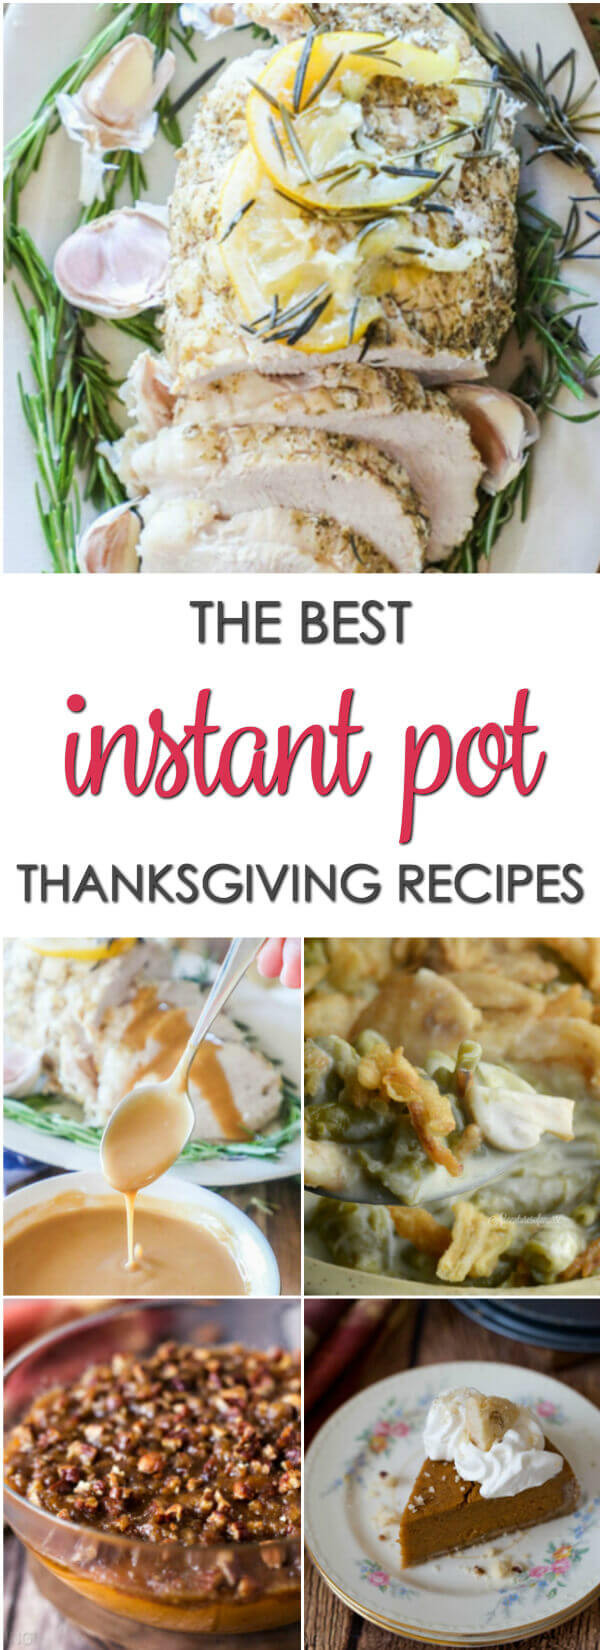 Instant Pot Christmas Recipes
 Easy Instant Pot Recipes for Thanksgiving